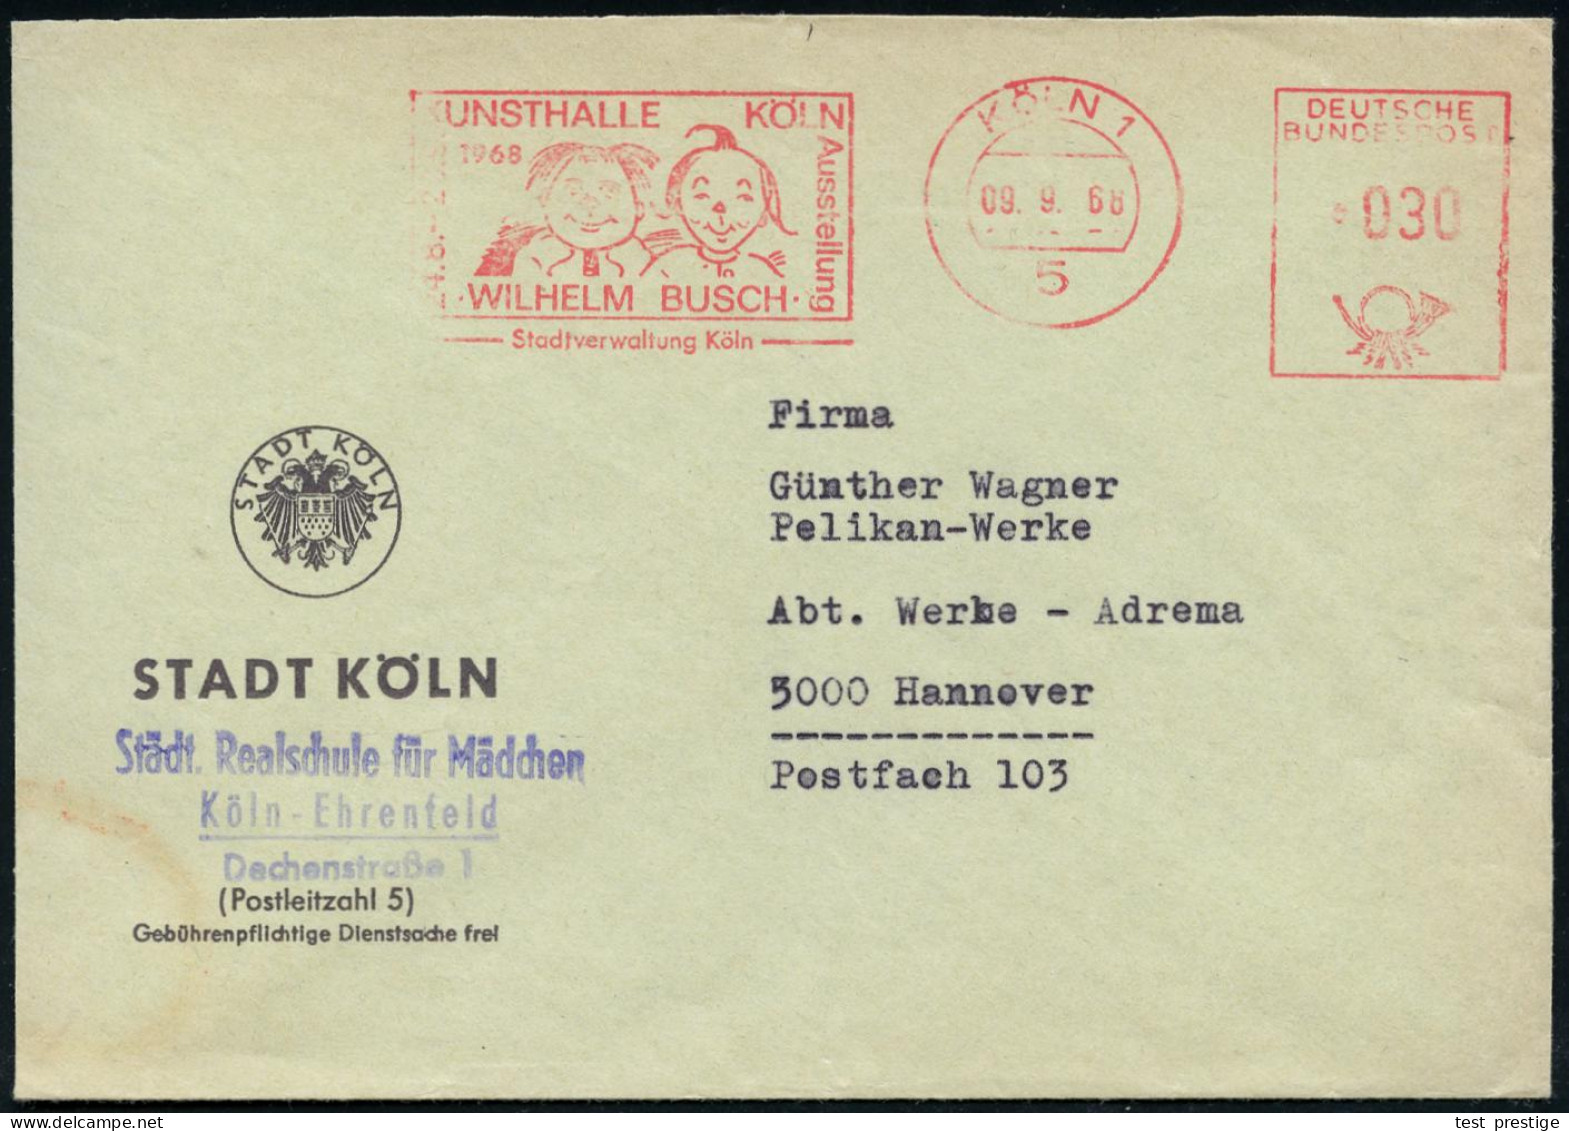 5 KÖLN 1/ KUNSTHALLE KÖLN/ Ausstellung/ WILHELM BUSCH/ Stadtverwaltung.. 1968 (9.9.) Seltener AFS = "Max & Moritz" , Com - Comics